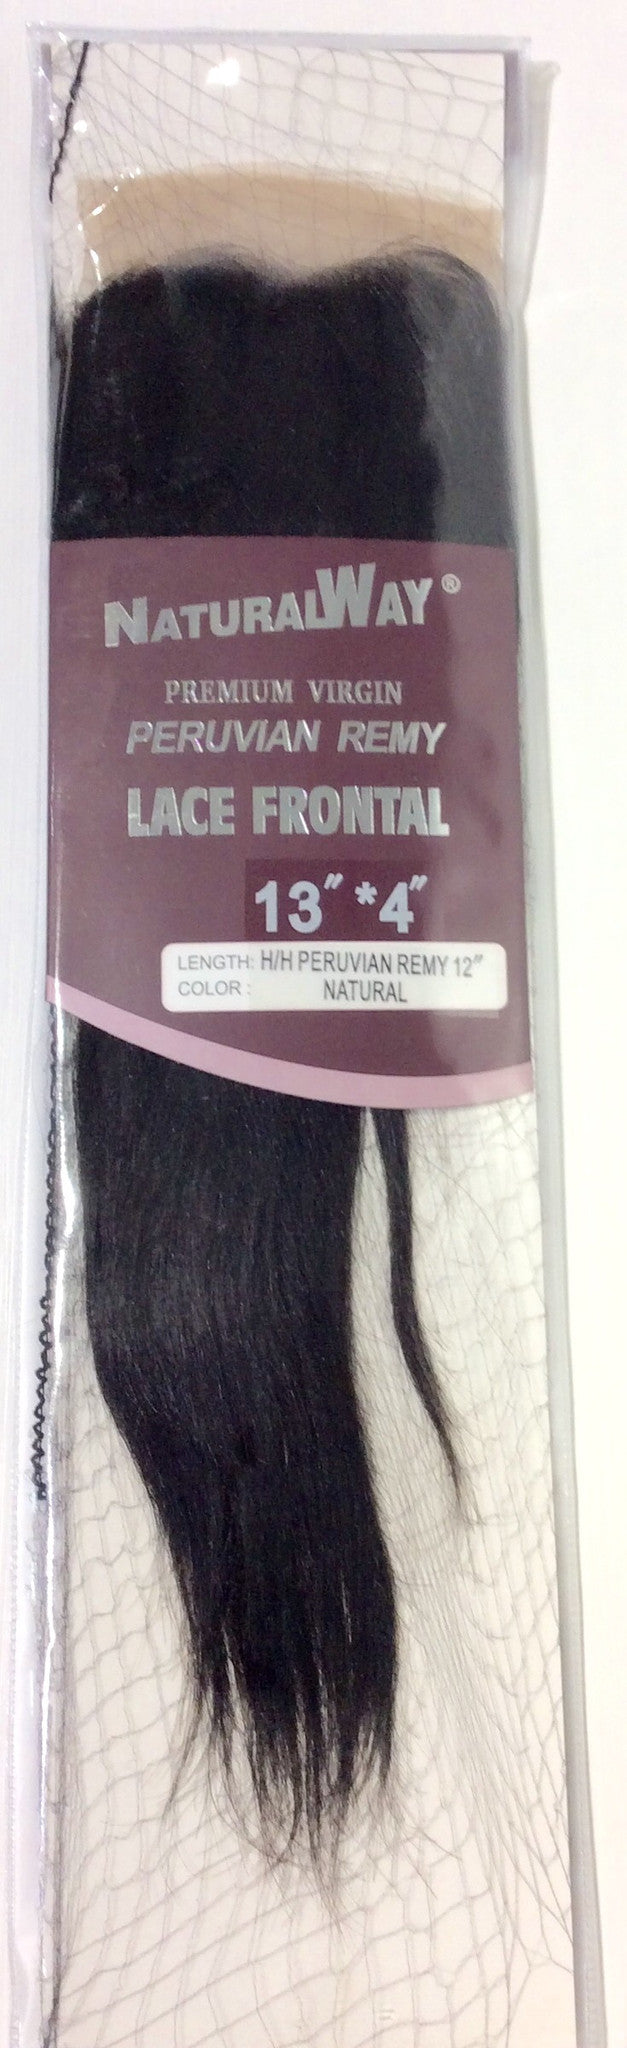 12" Premium Virgin Peruvian  Remy Lace Frontal 13"*4" Natural